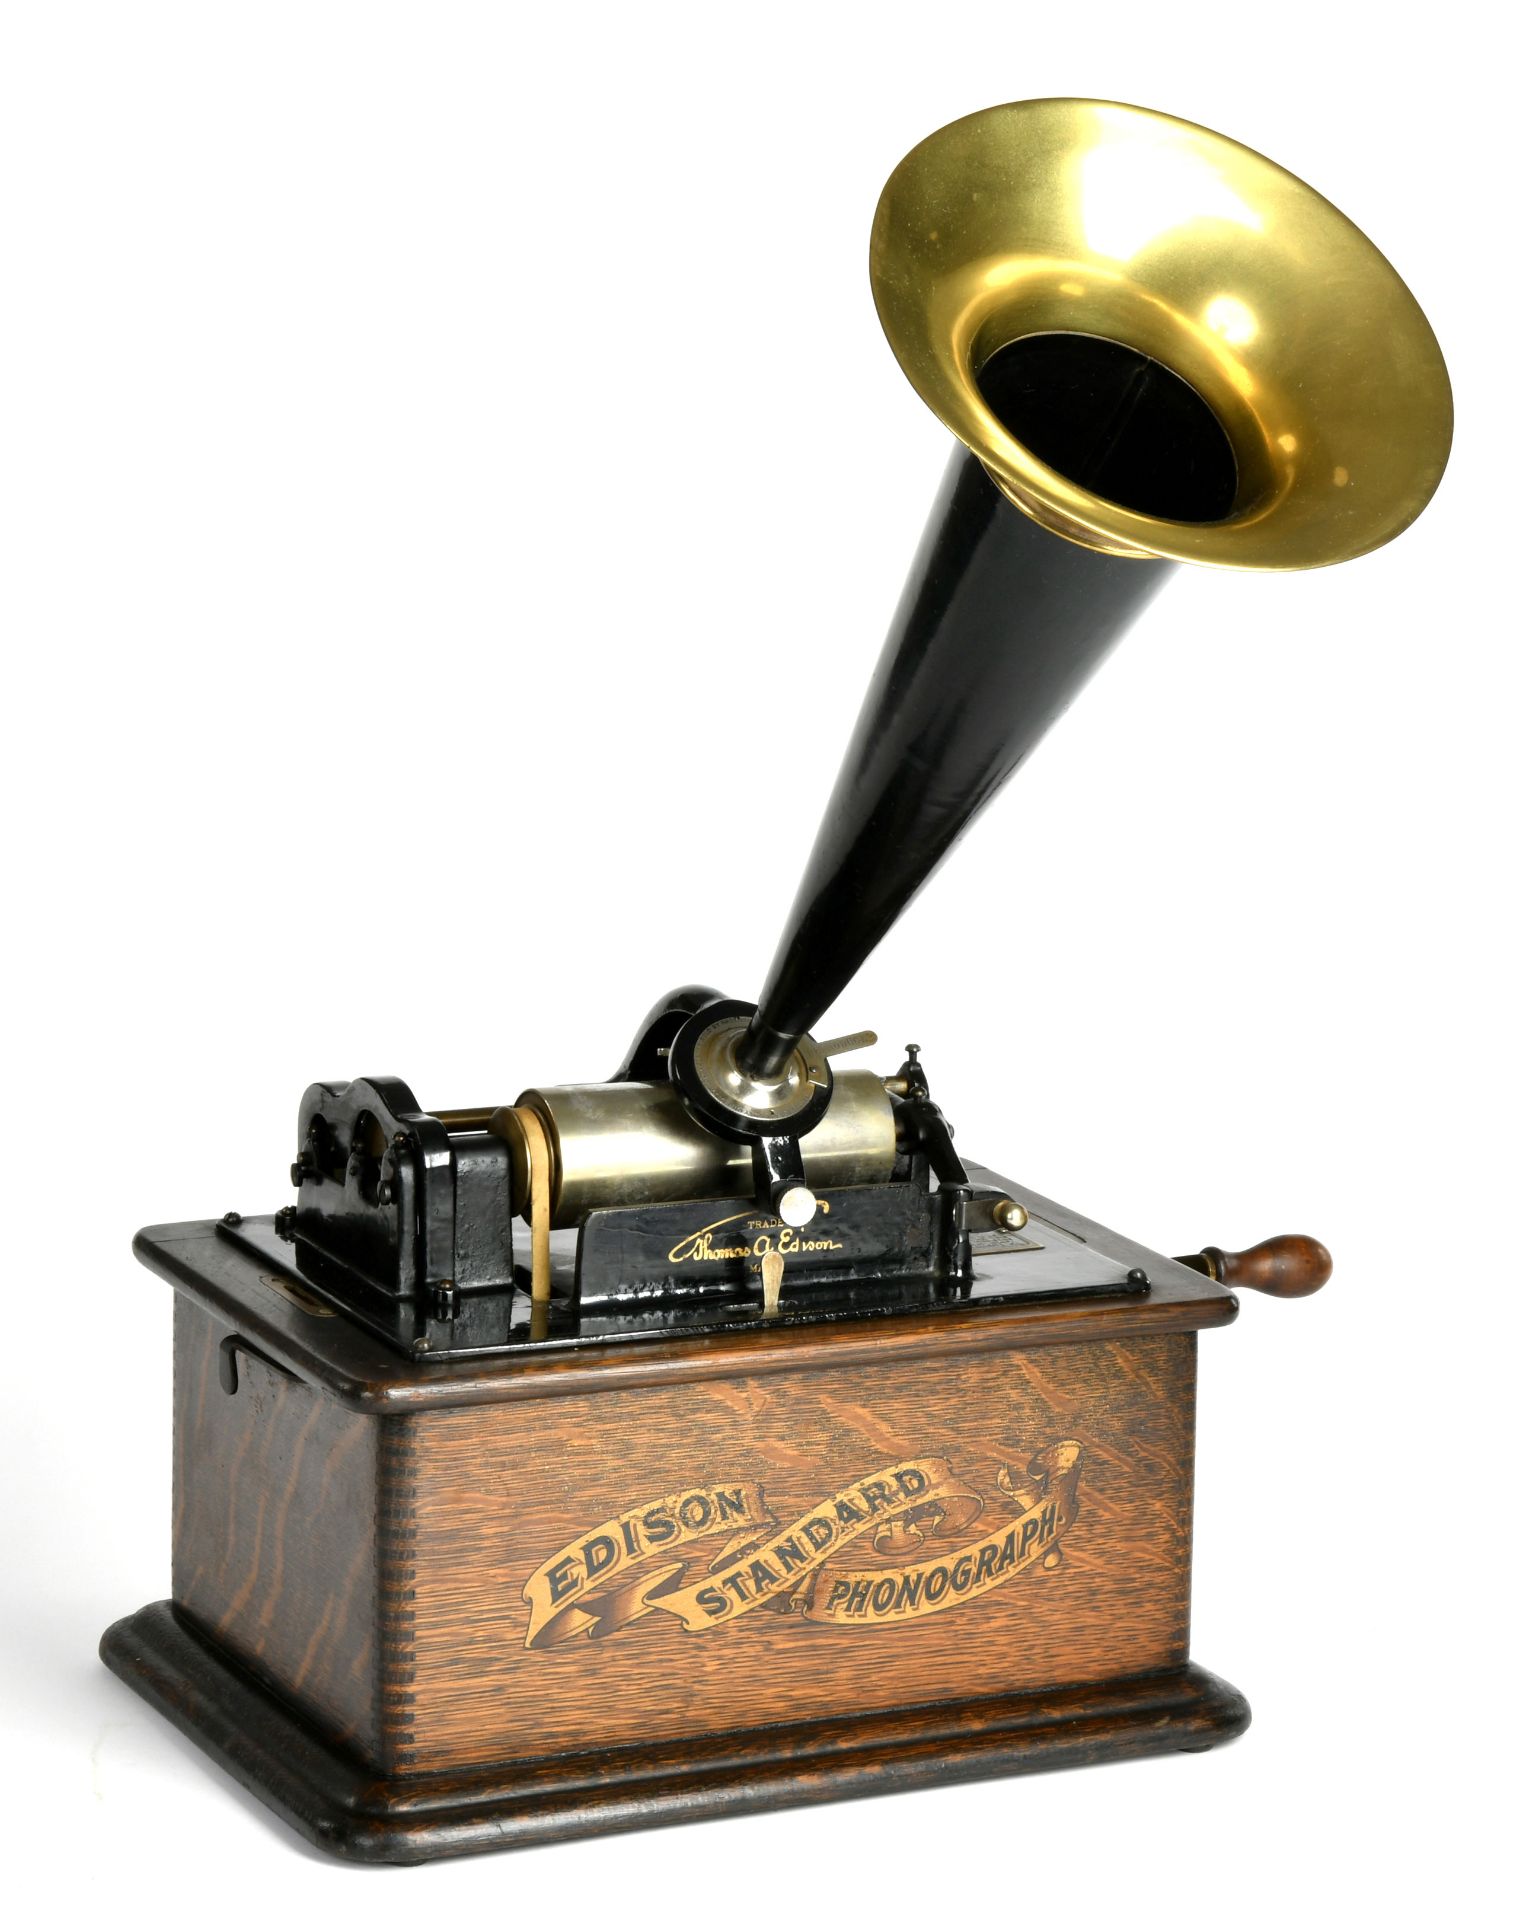 Edison, Standard phonograph, Model C, around 1915 (s 285549), funct. ok, good original conditions - Image 2 of 2